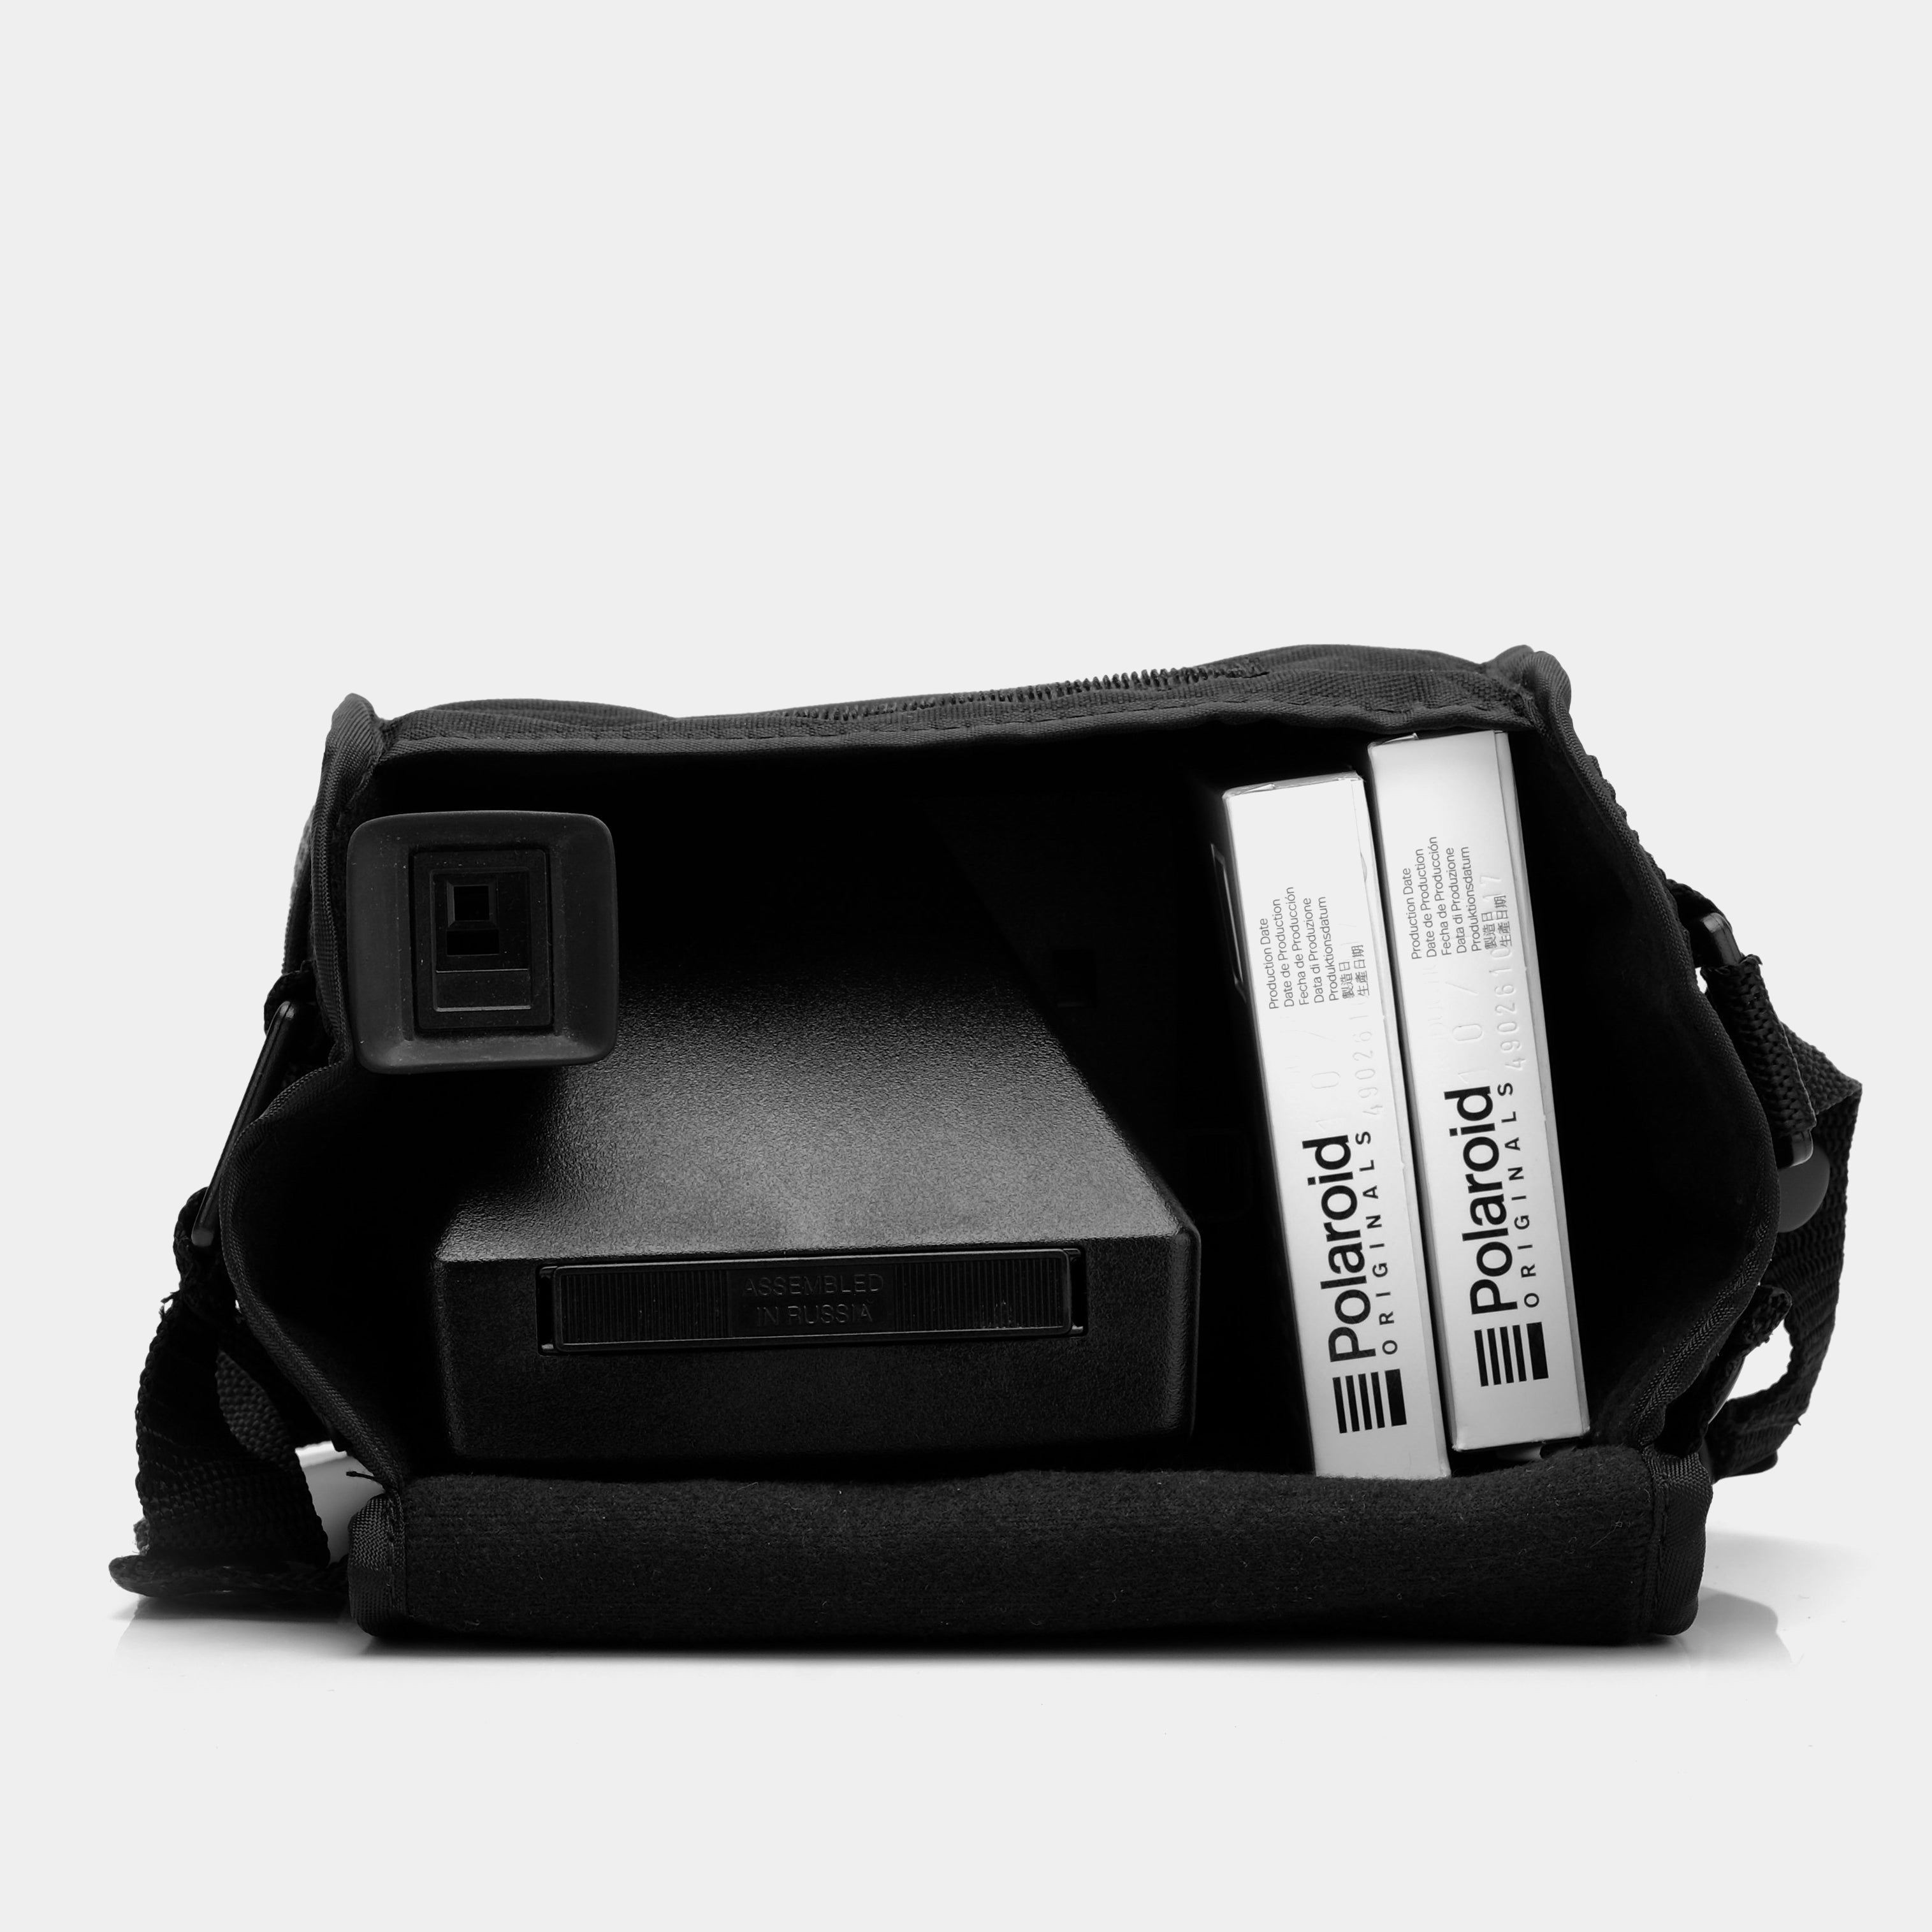 Polaroid Mesh Pocket Instant Camera Bag with Retrospekt Pin